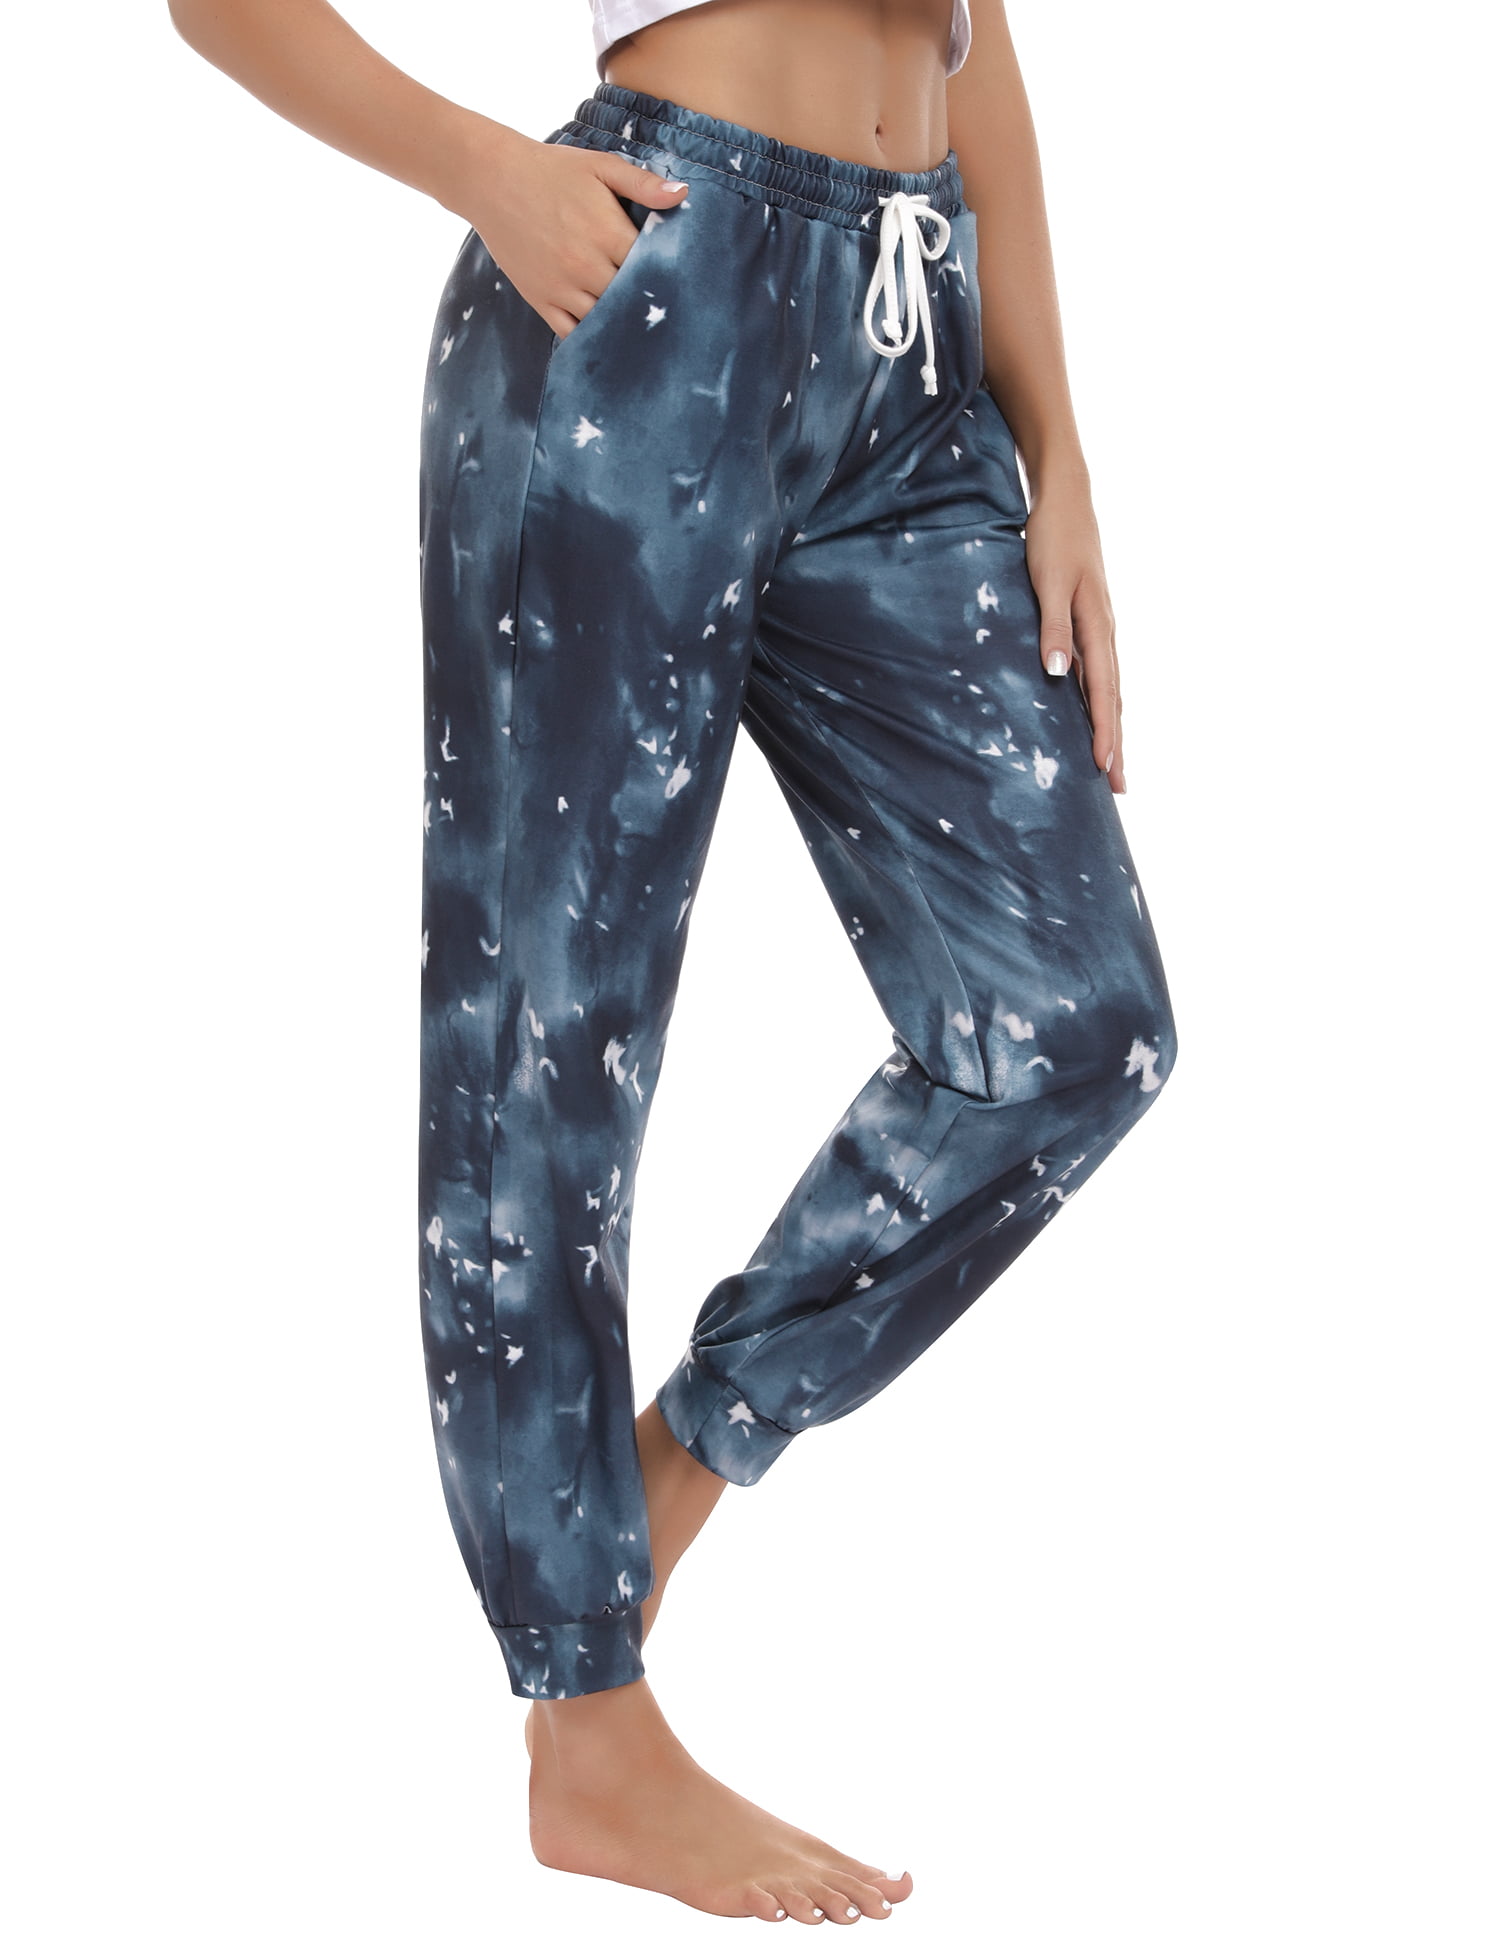 Irevial Women Tie Dye Pajamas Pants Casual Comfy Elastic Waist Drawstring Lounge Sleepwear Sweatpants with Pockets